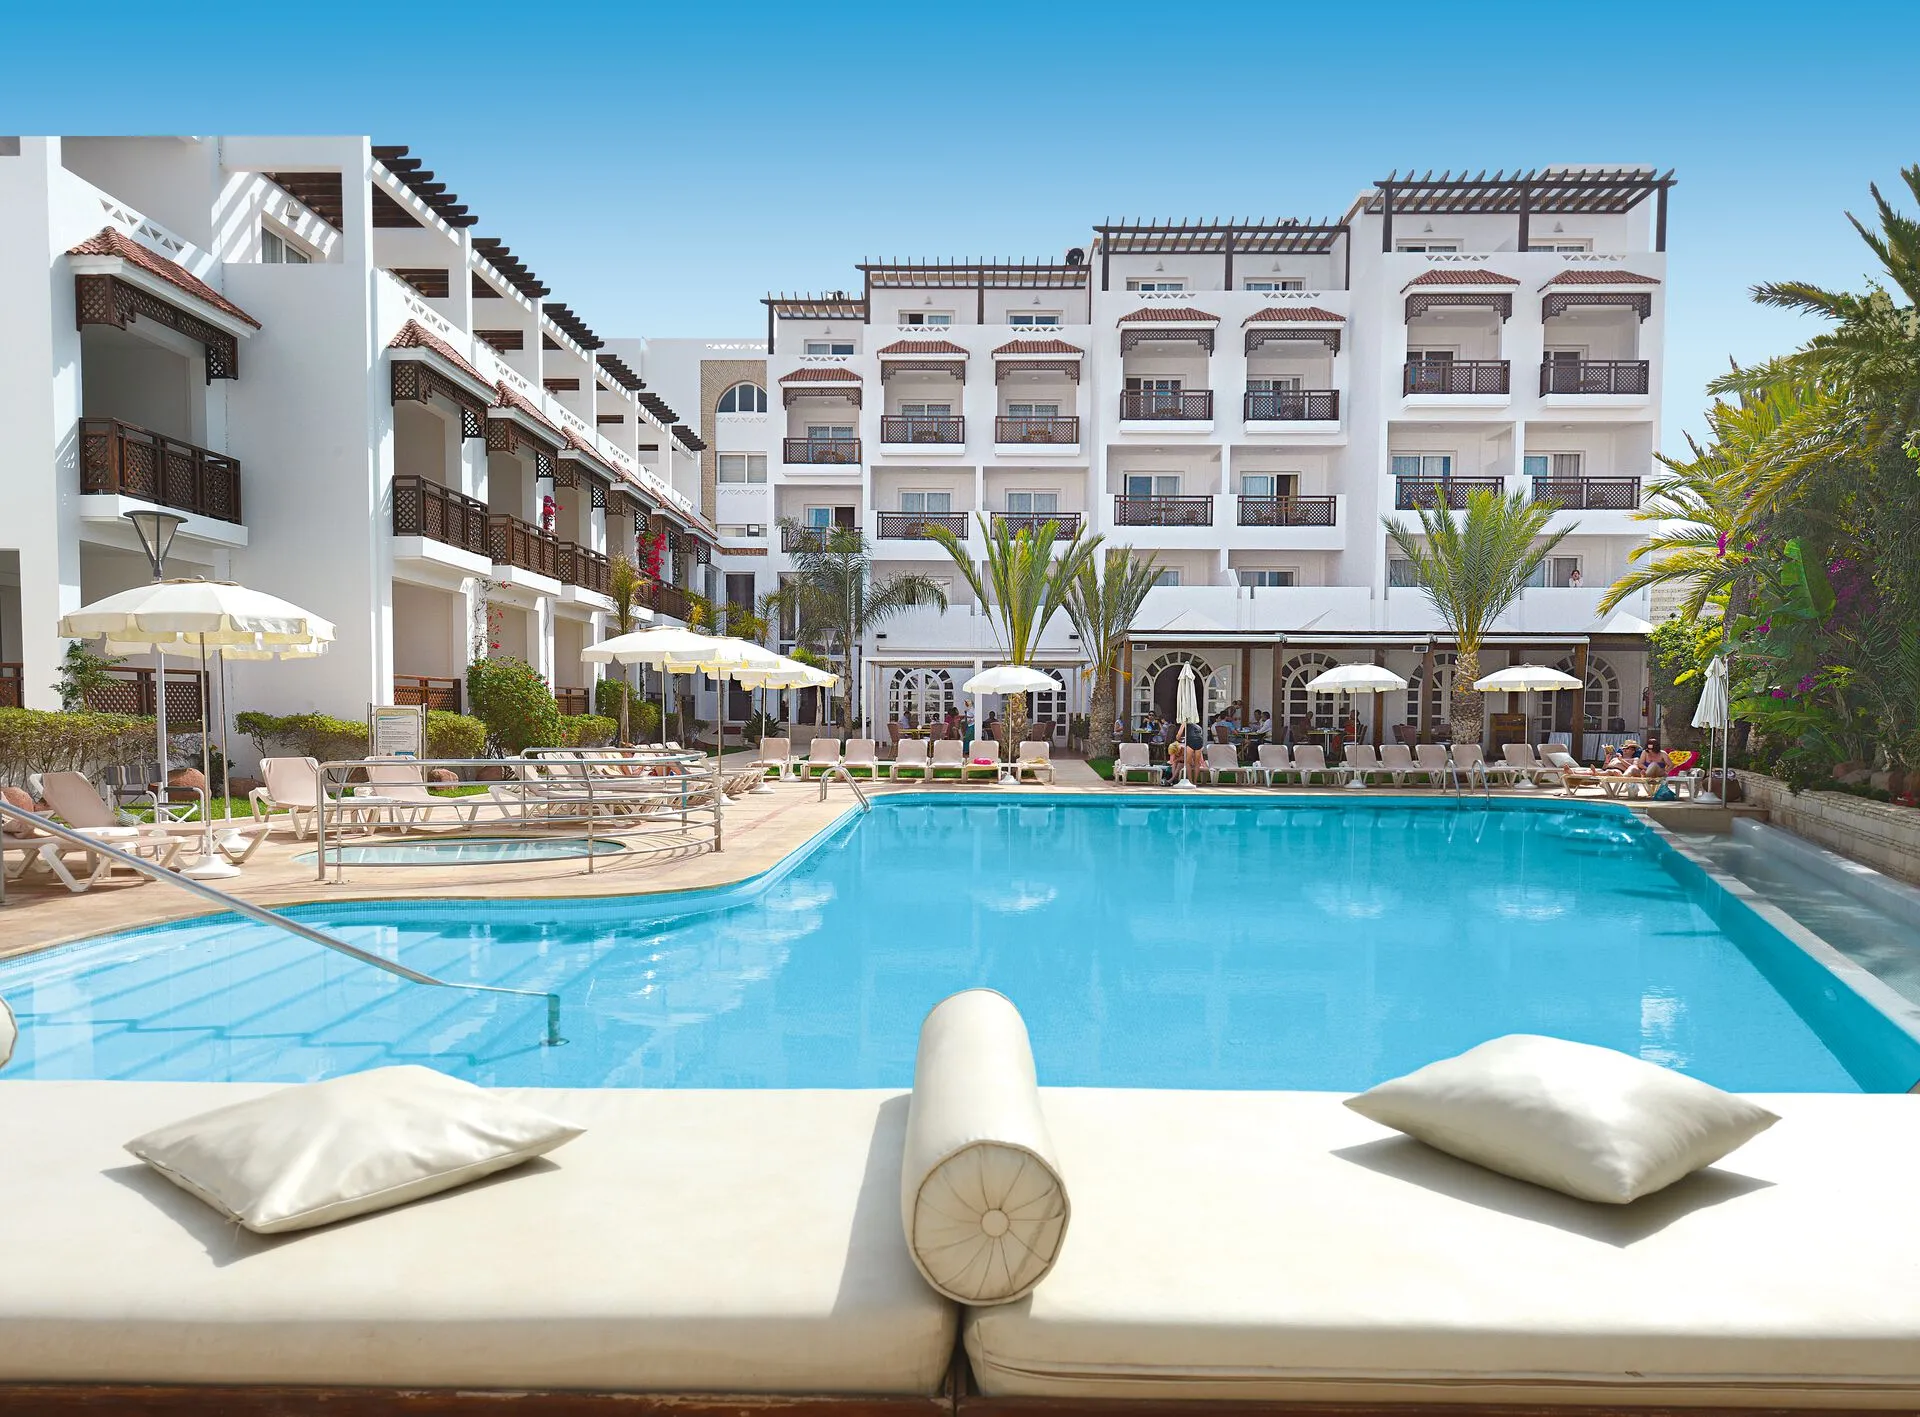 Maroc - Agadir - Hôtel Timoulay & Spa 4*